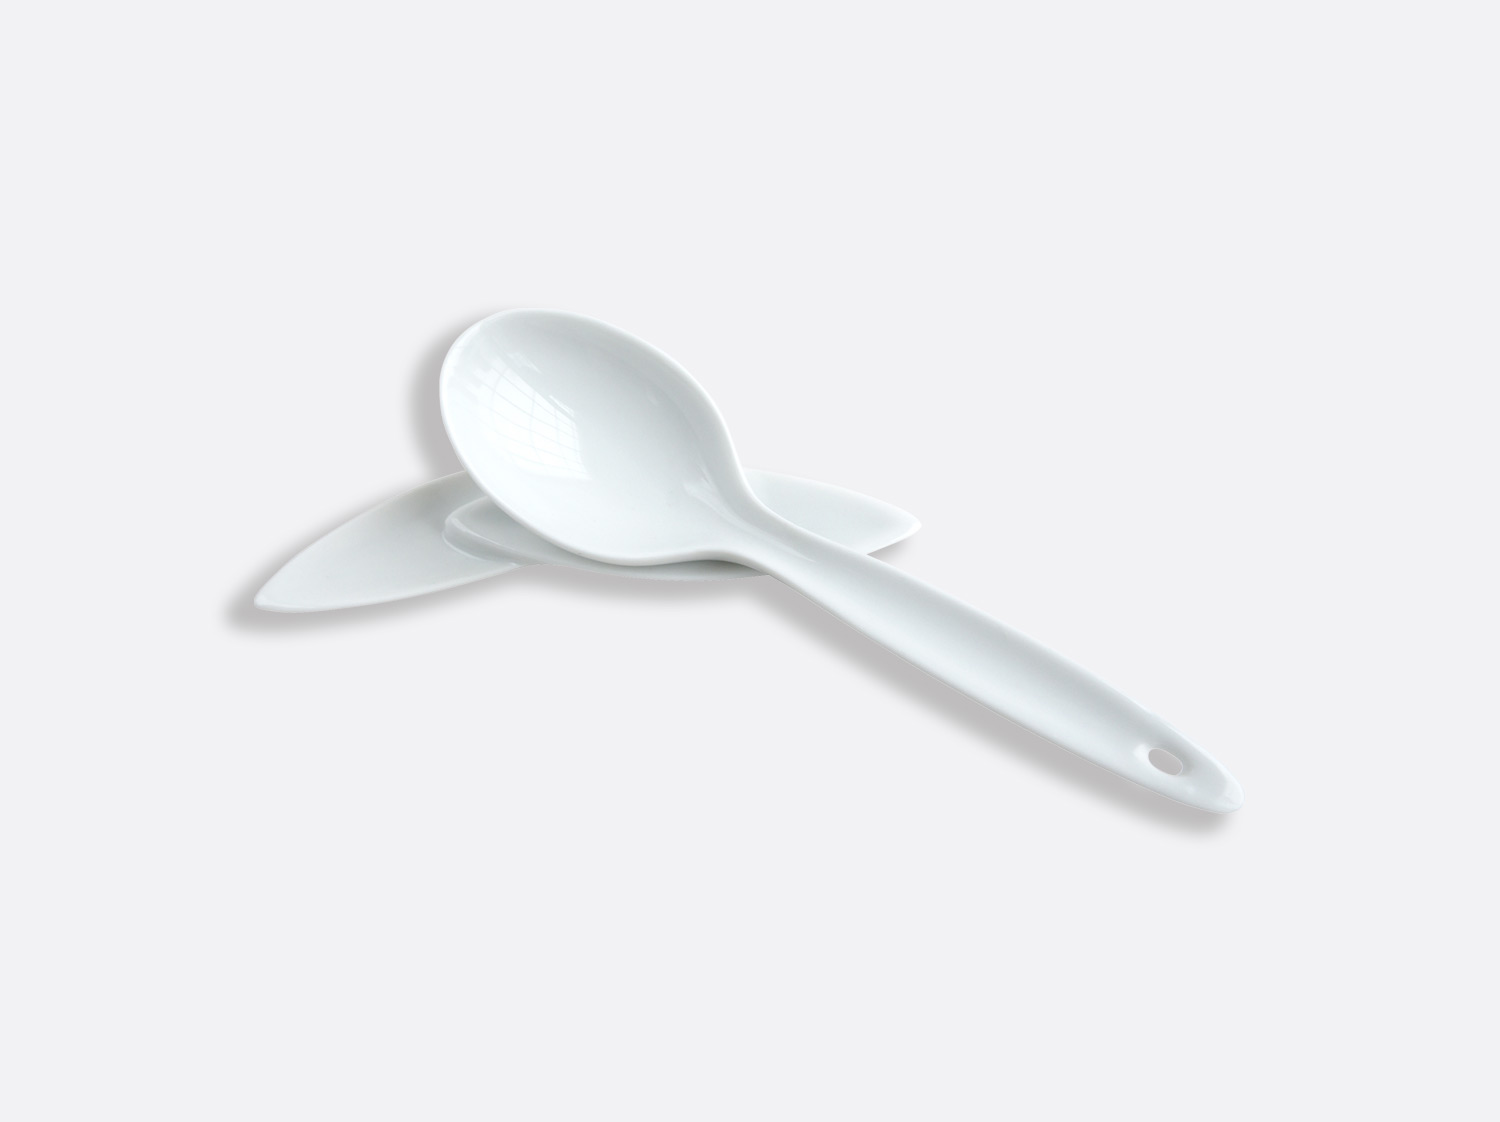 China Chopsticks holder & spoon of the collection CHRYSANTHEMUM | Bernardaud